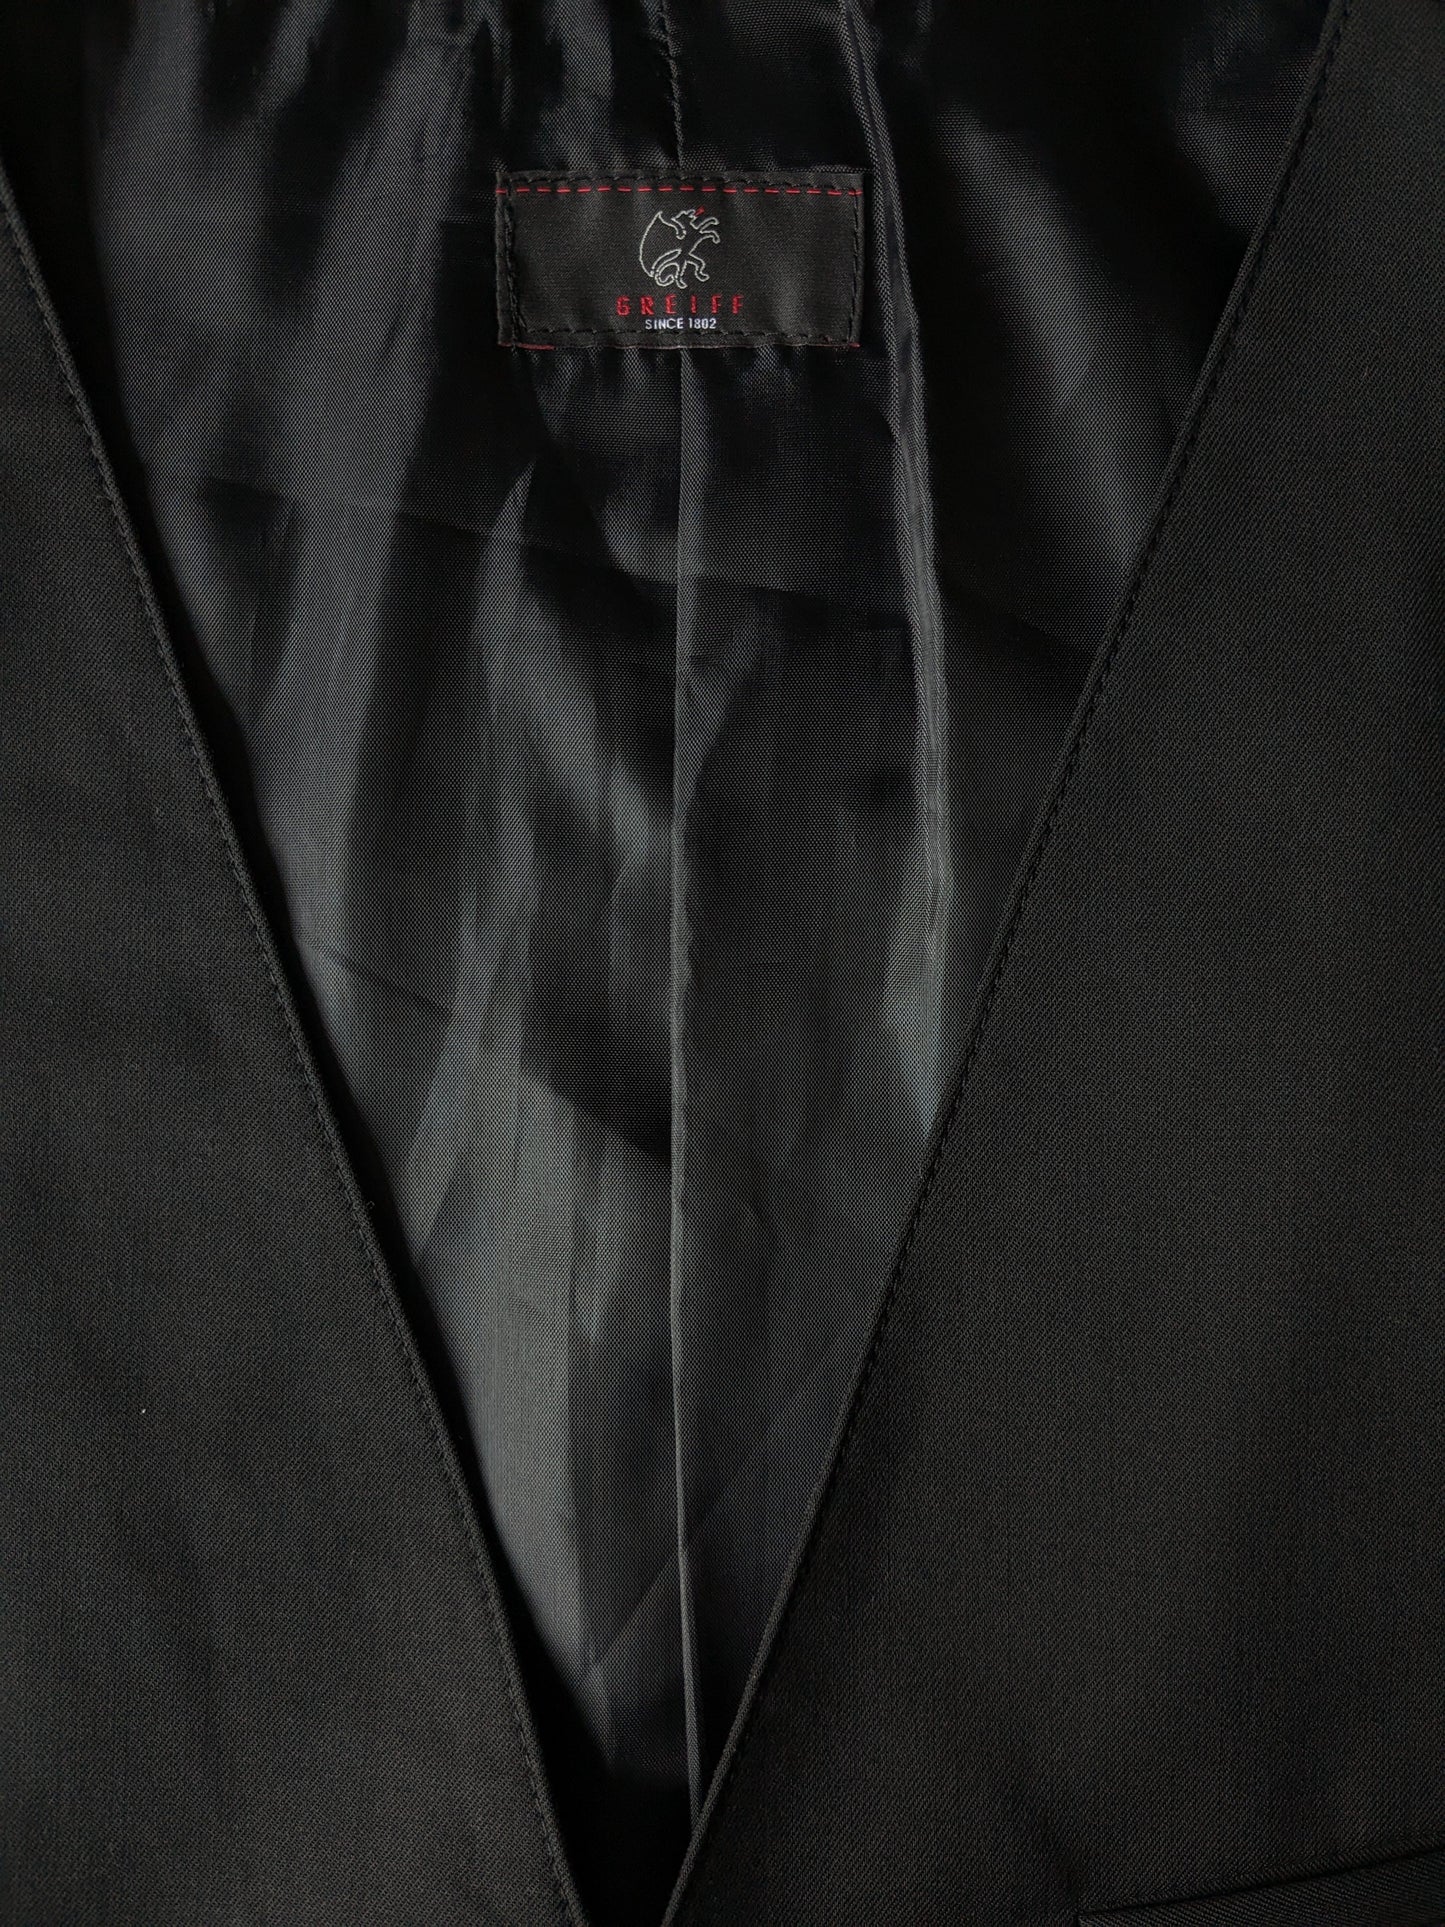 Greiff Woolen Wistcoat. Color negro. Tamaño 50 / M. 1 bolsillo interno. #336.